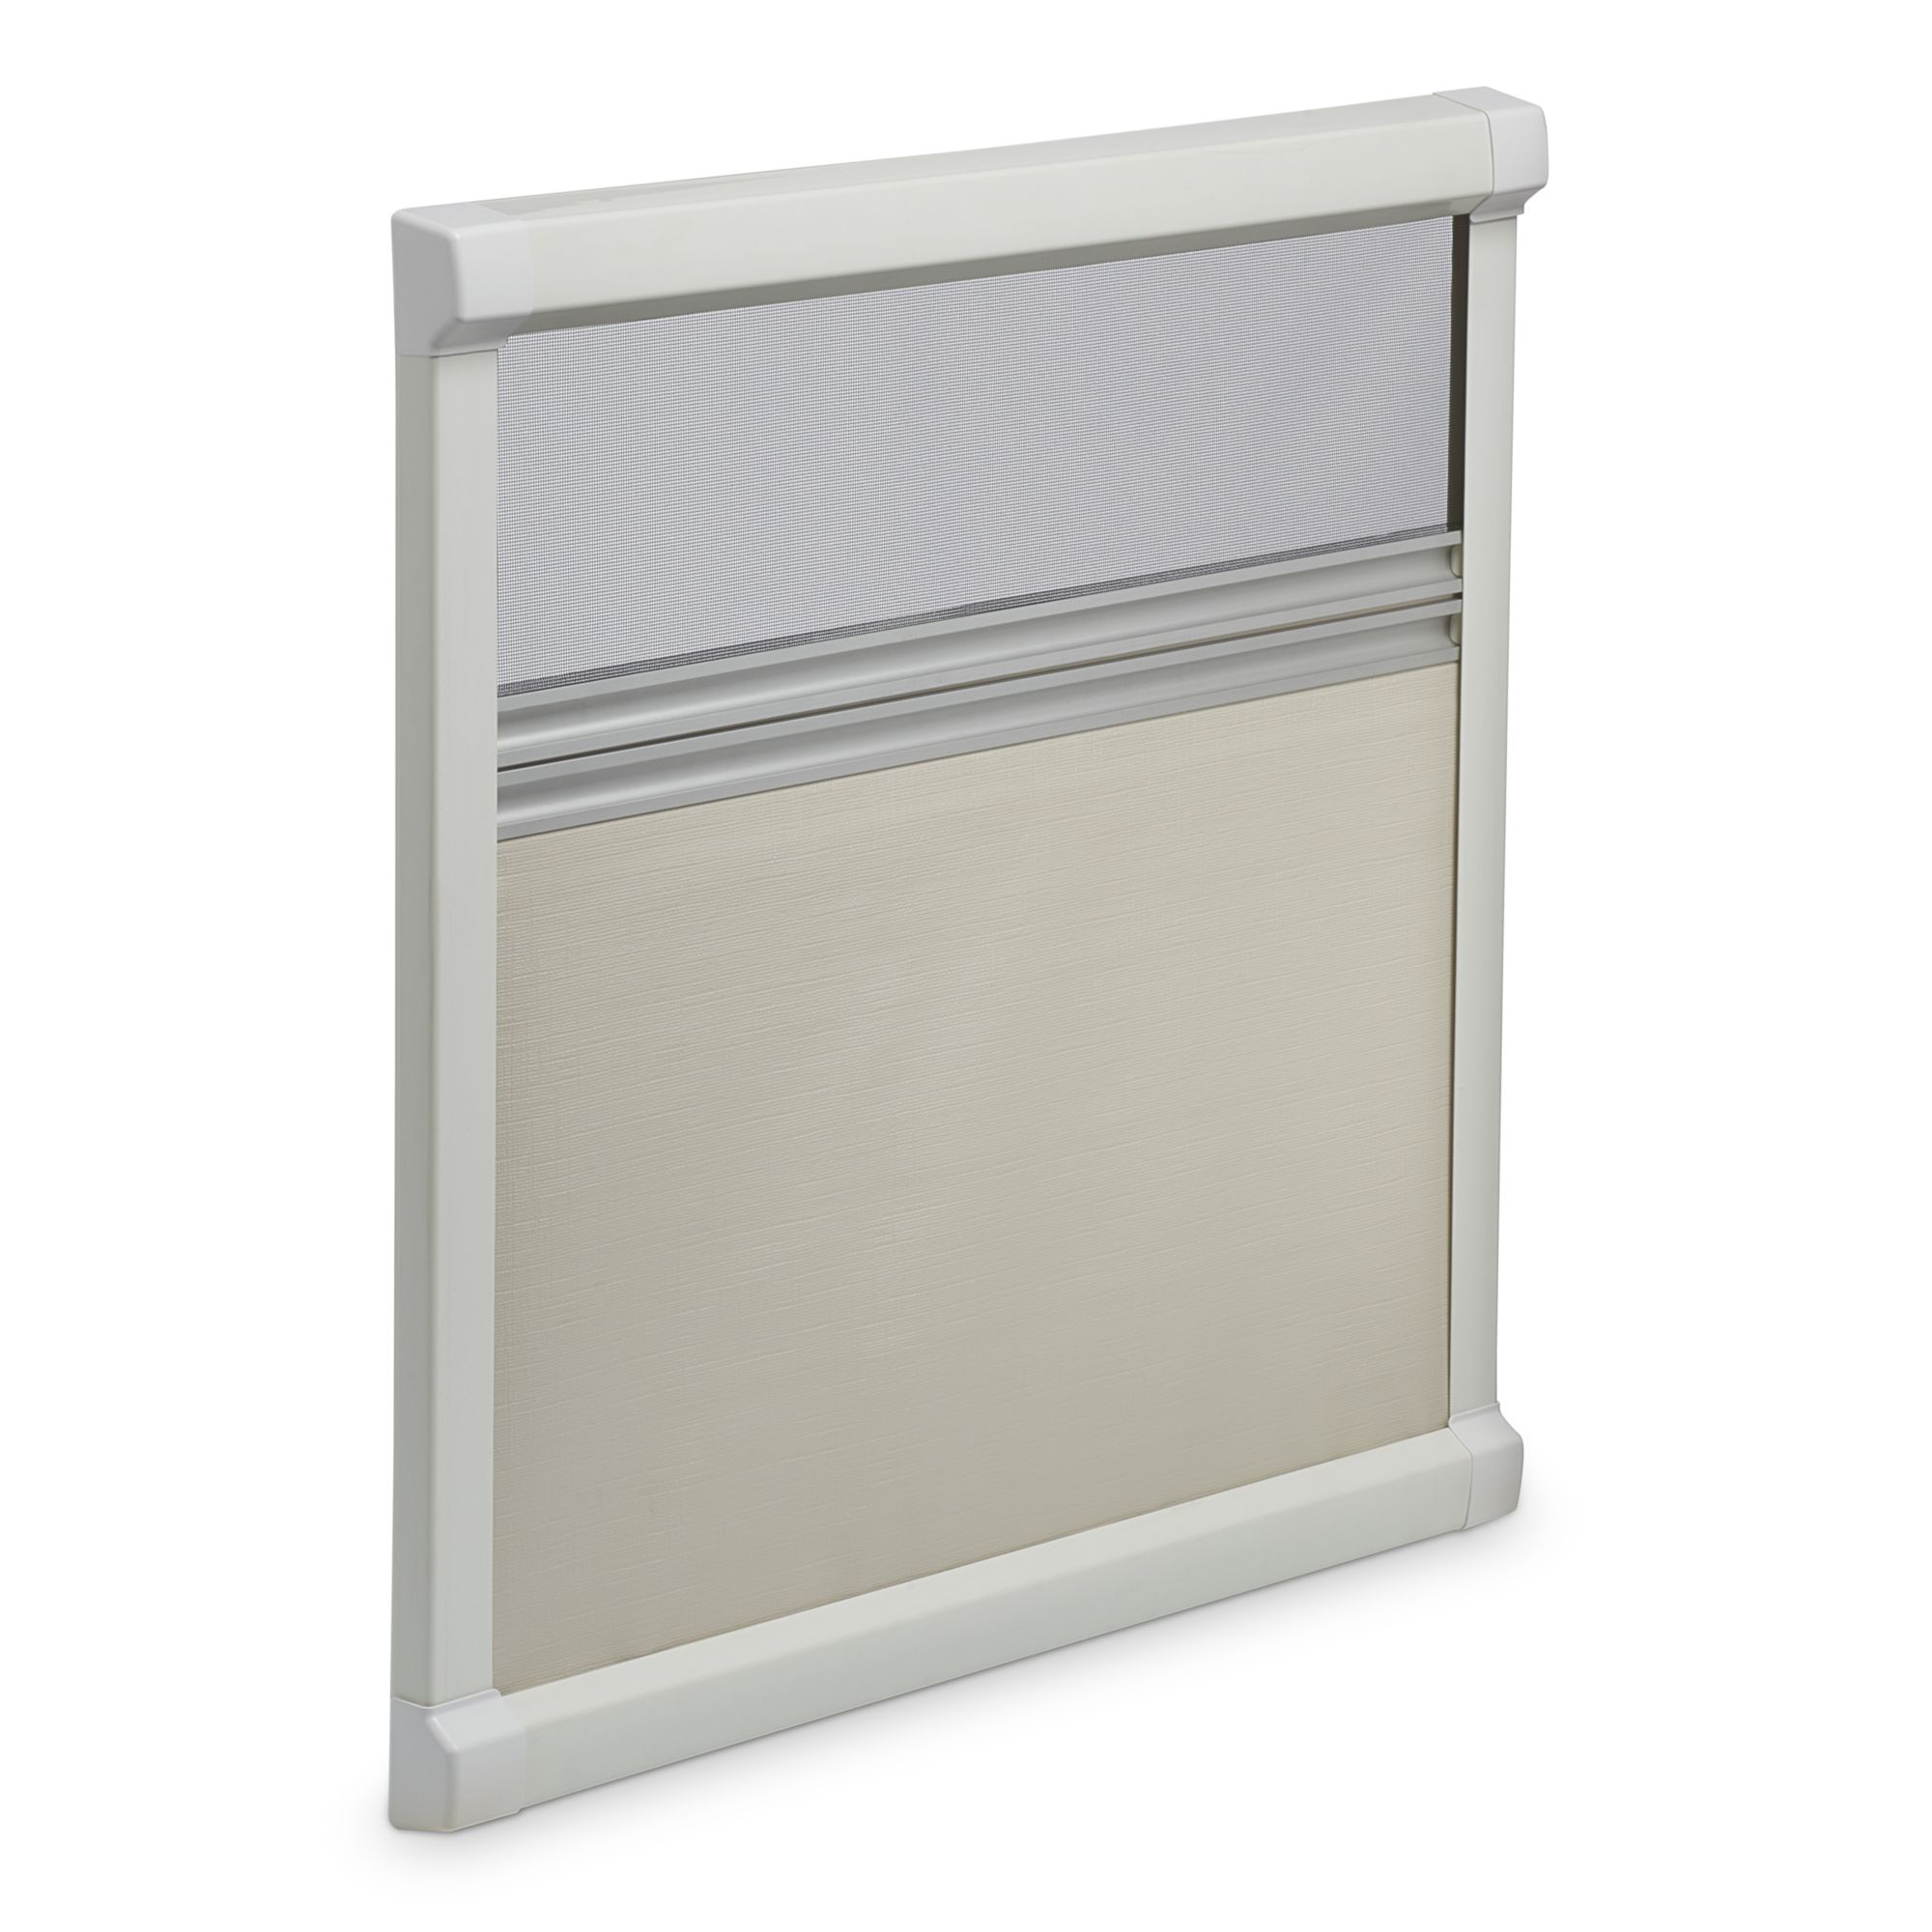 Dometic DB1R Window Roller Blind, 1280 x 530 mm, cream-white